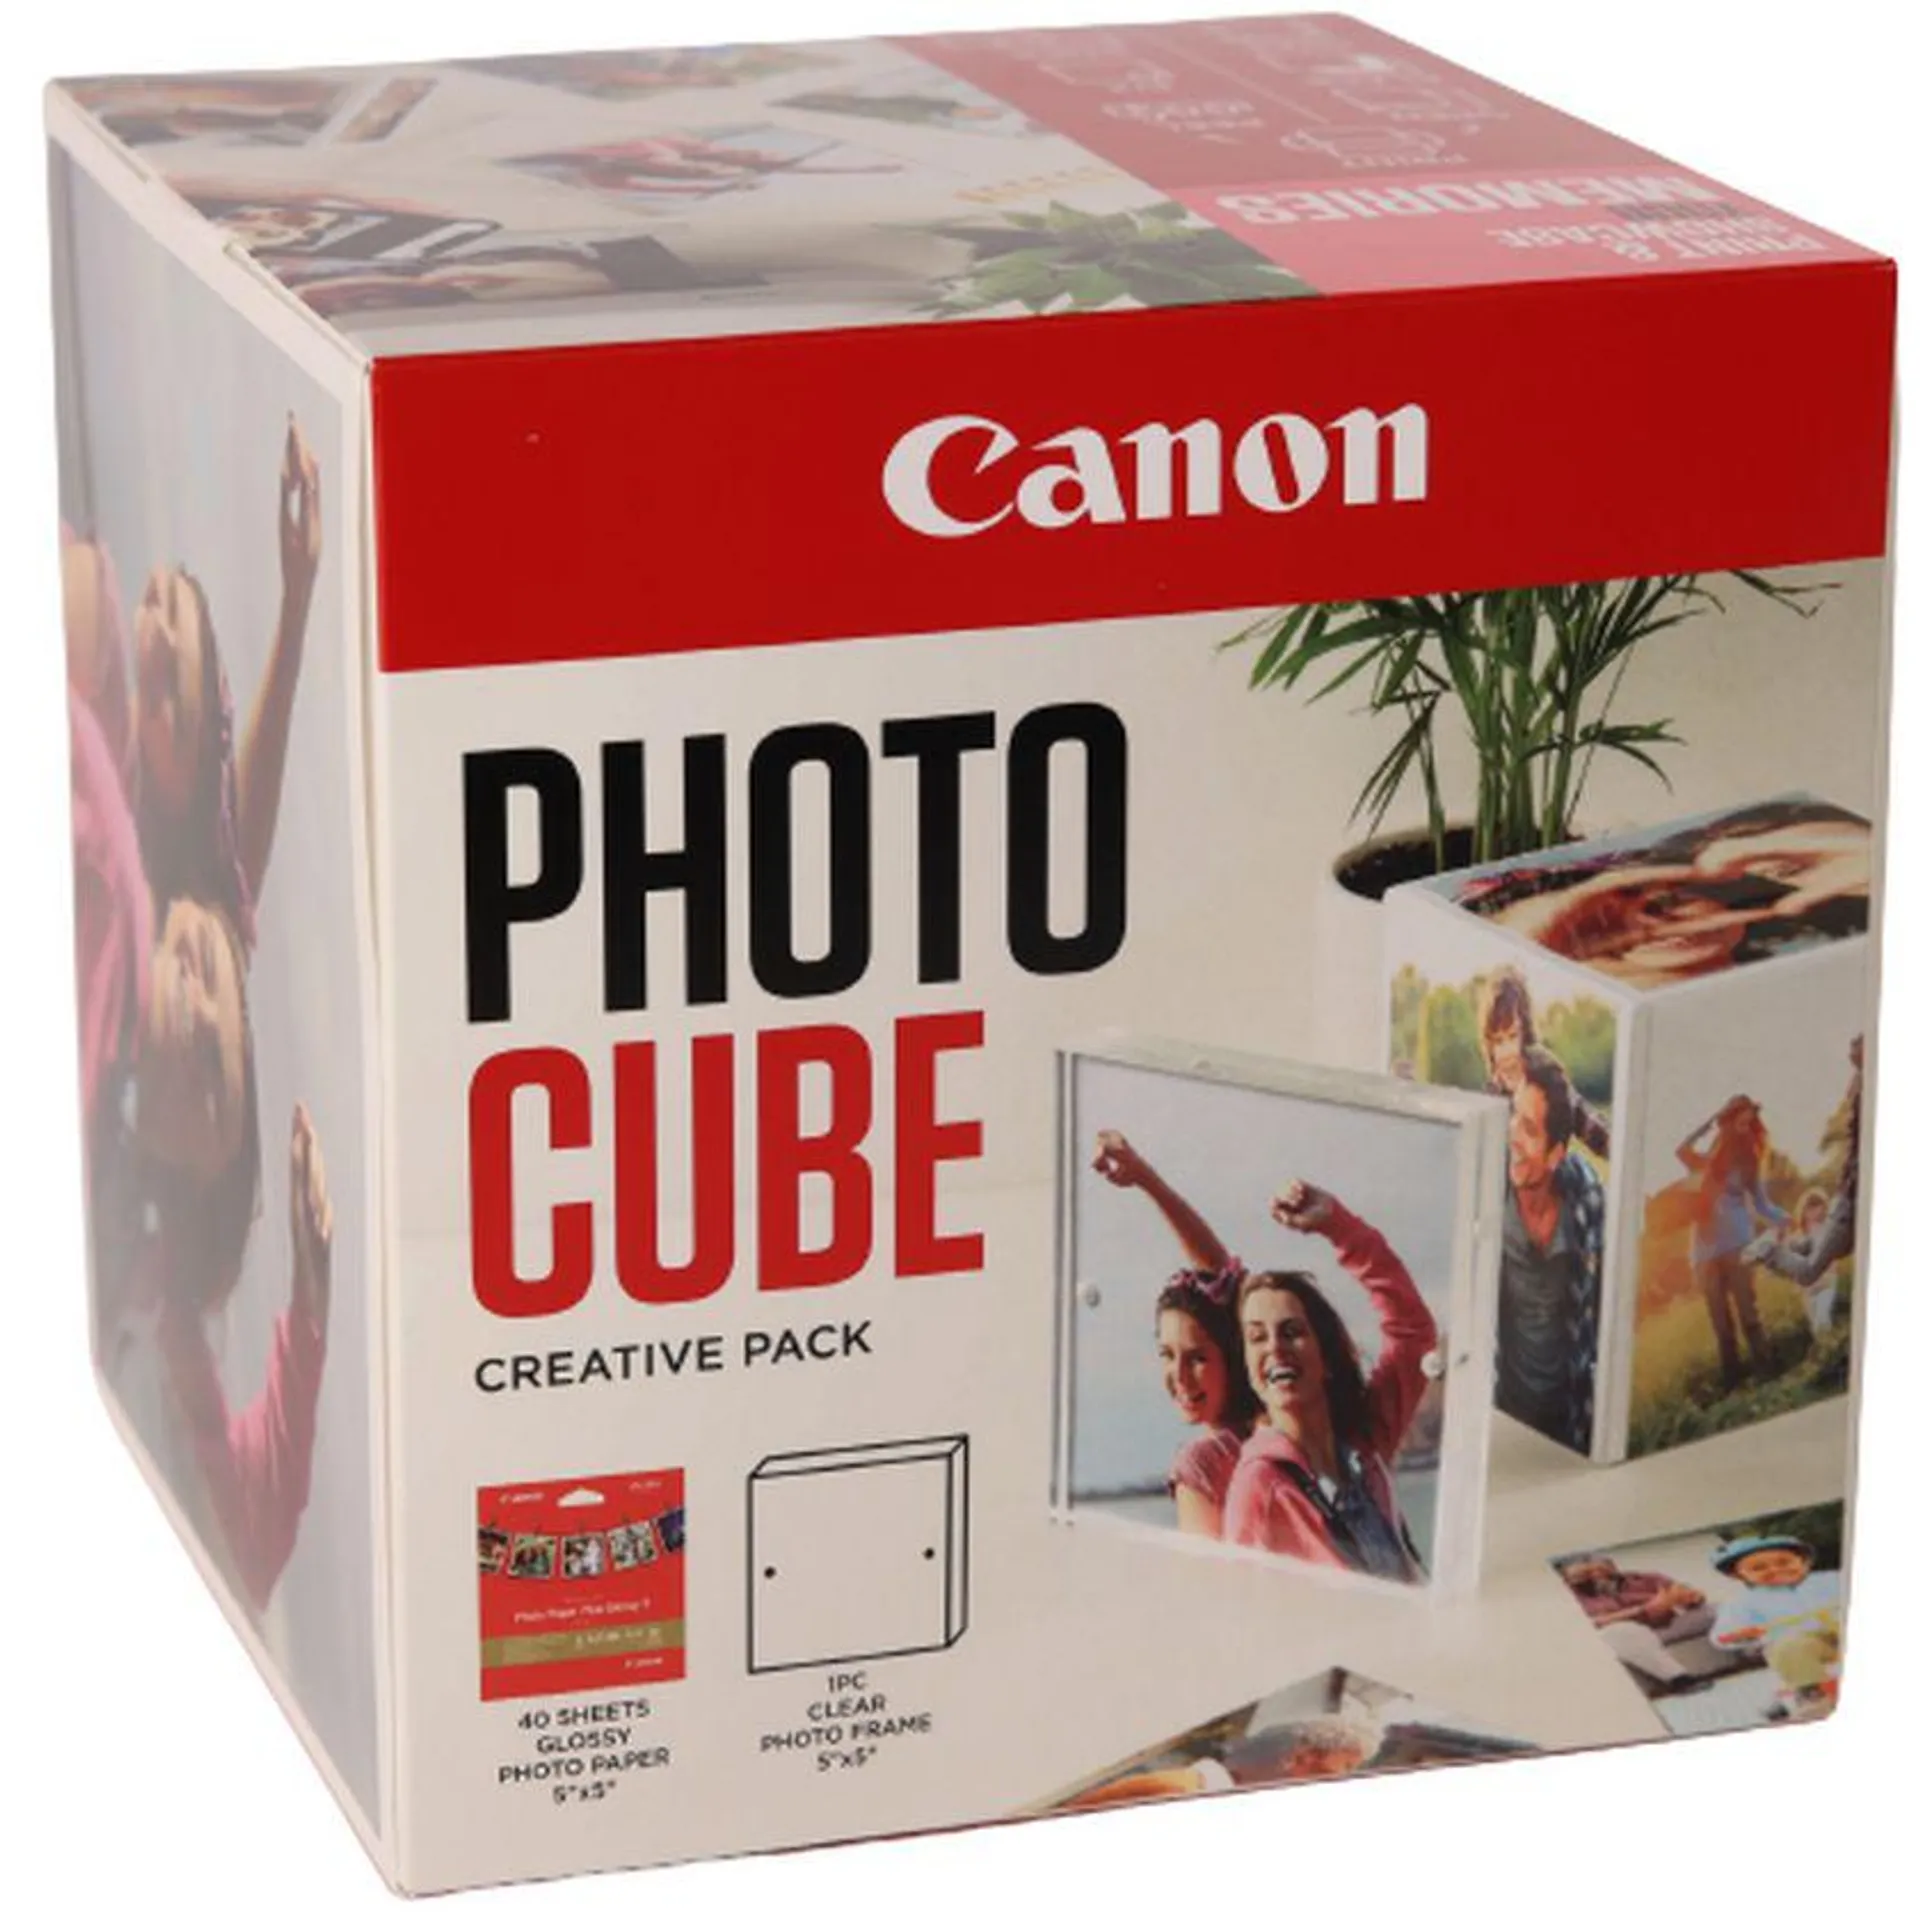 Canon Photo Cube und Frame + PP-201 Fotopapier Plus Glossy II 13 x 13 cm (40 Blatt) – Creative Pack, Pink